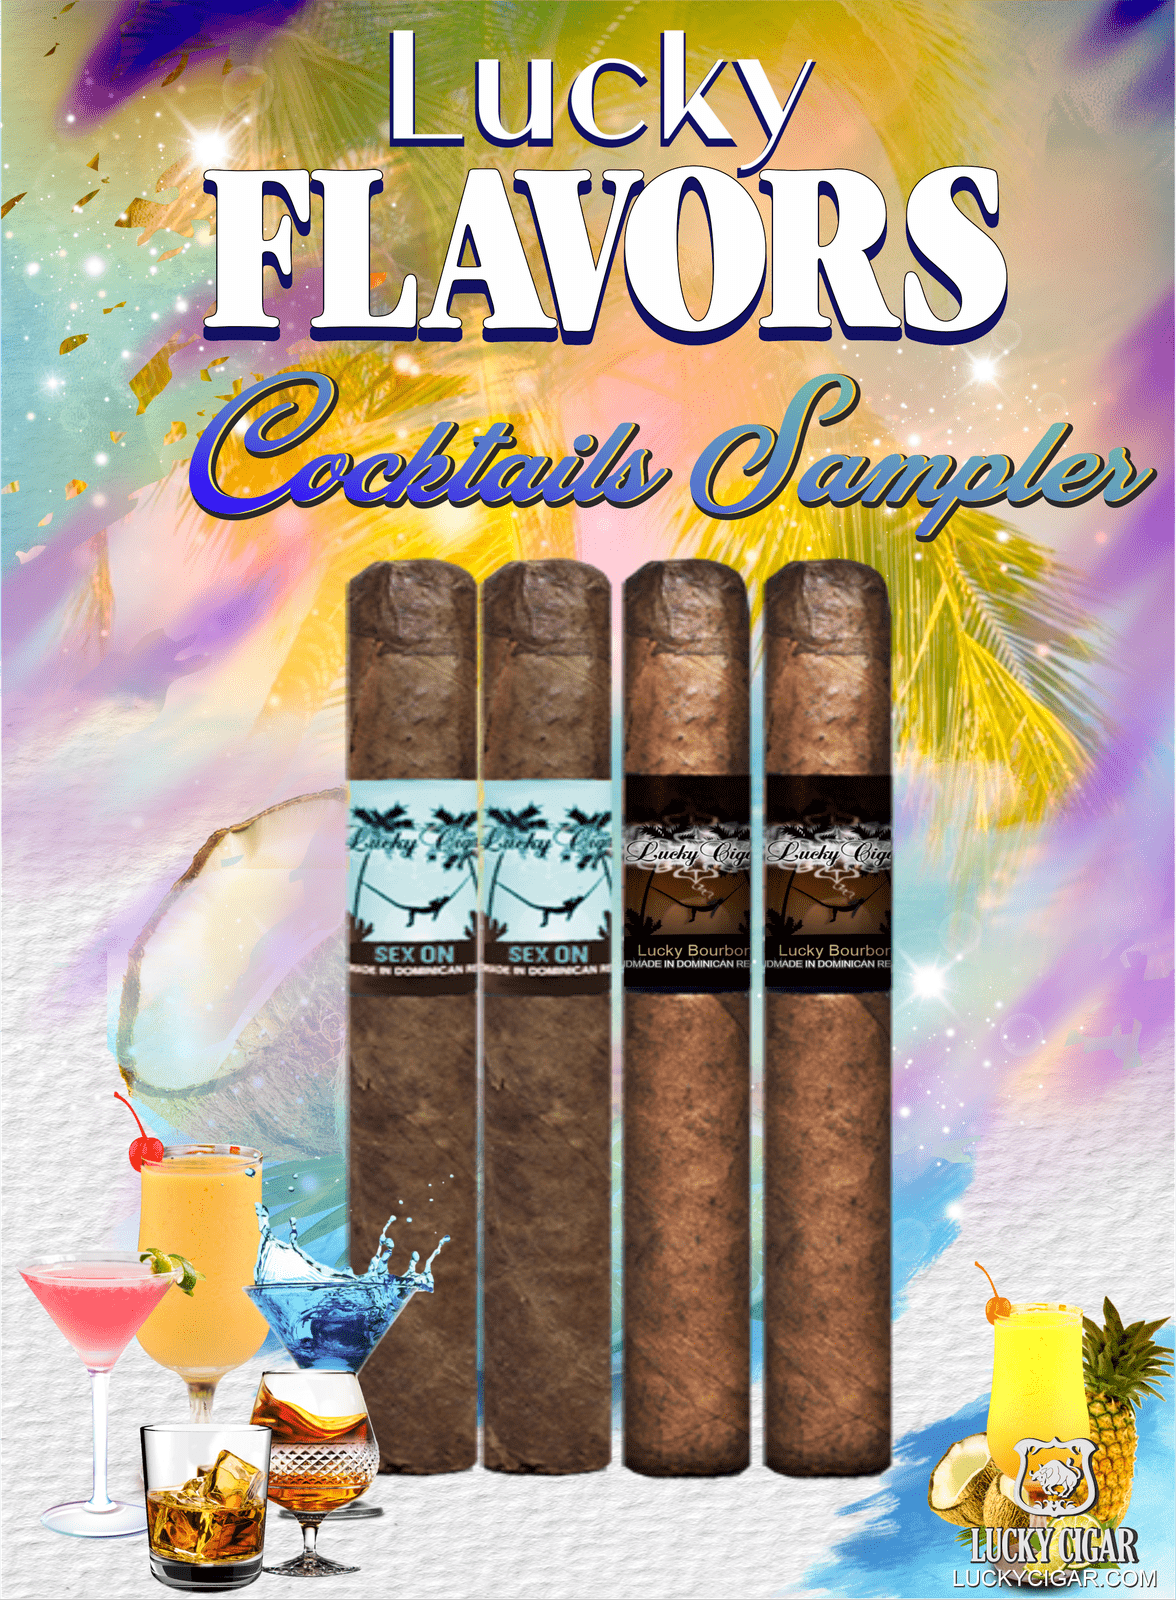 Flavored Cigars: Lucky Flavors 4 Piece Cocktails Sampler SOTB, Bourbon 2 Sex on the Beach 5x42 Cigars 2 Lucky Bourbon 5x42 Cigars